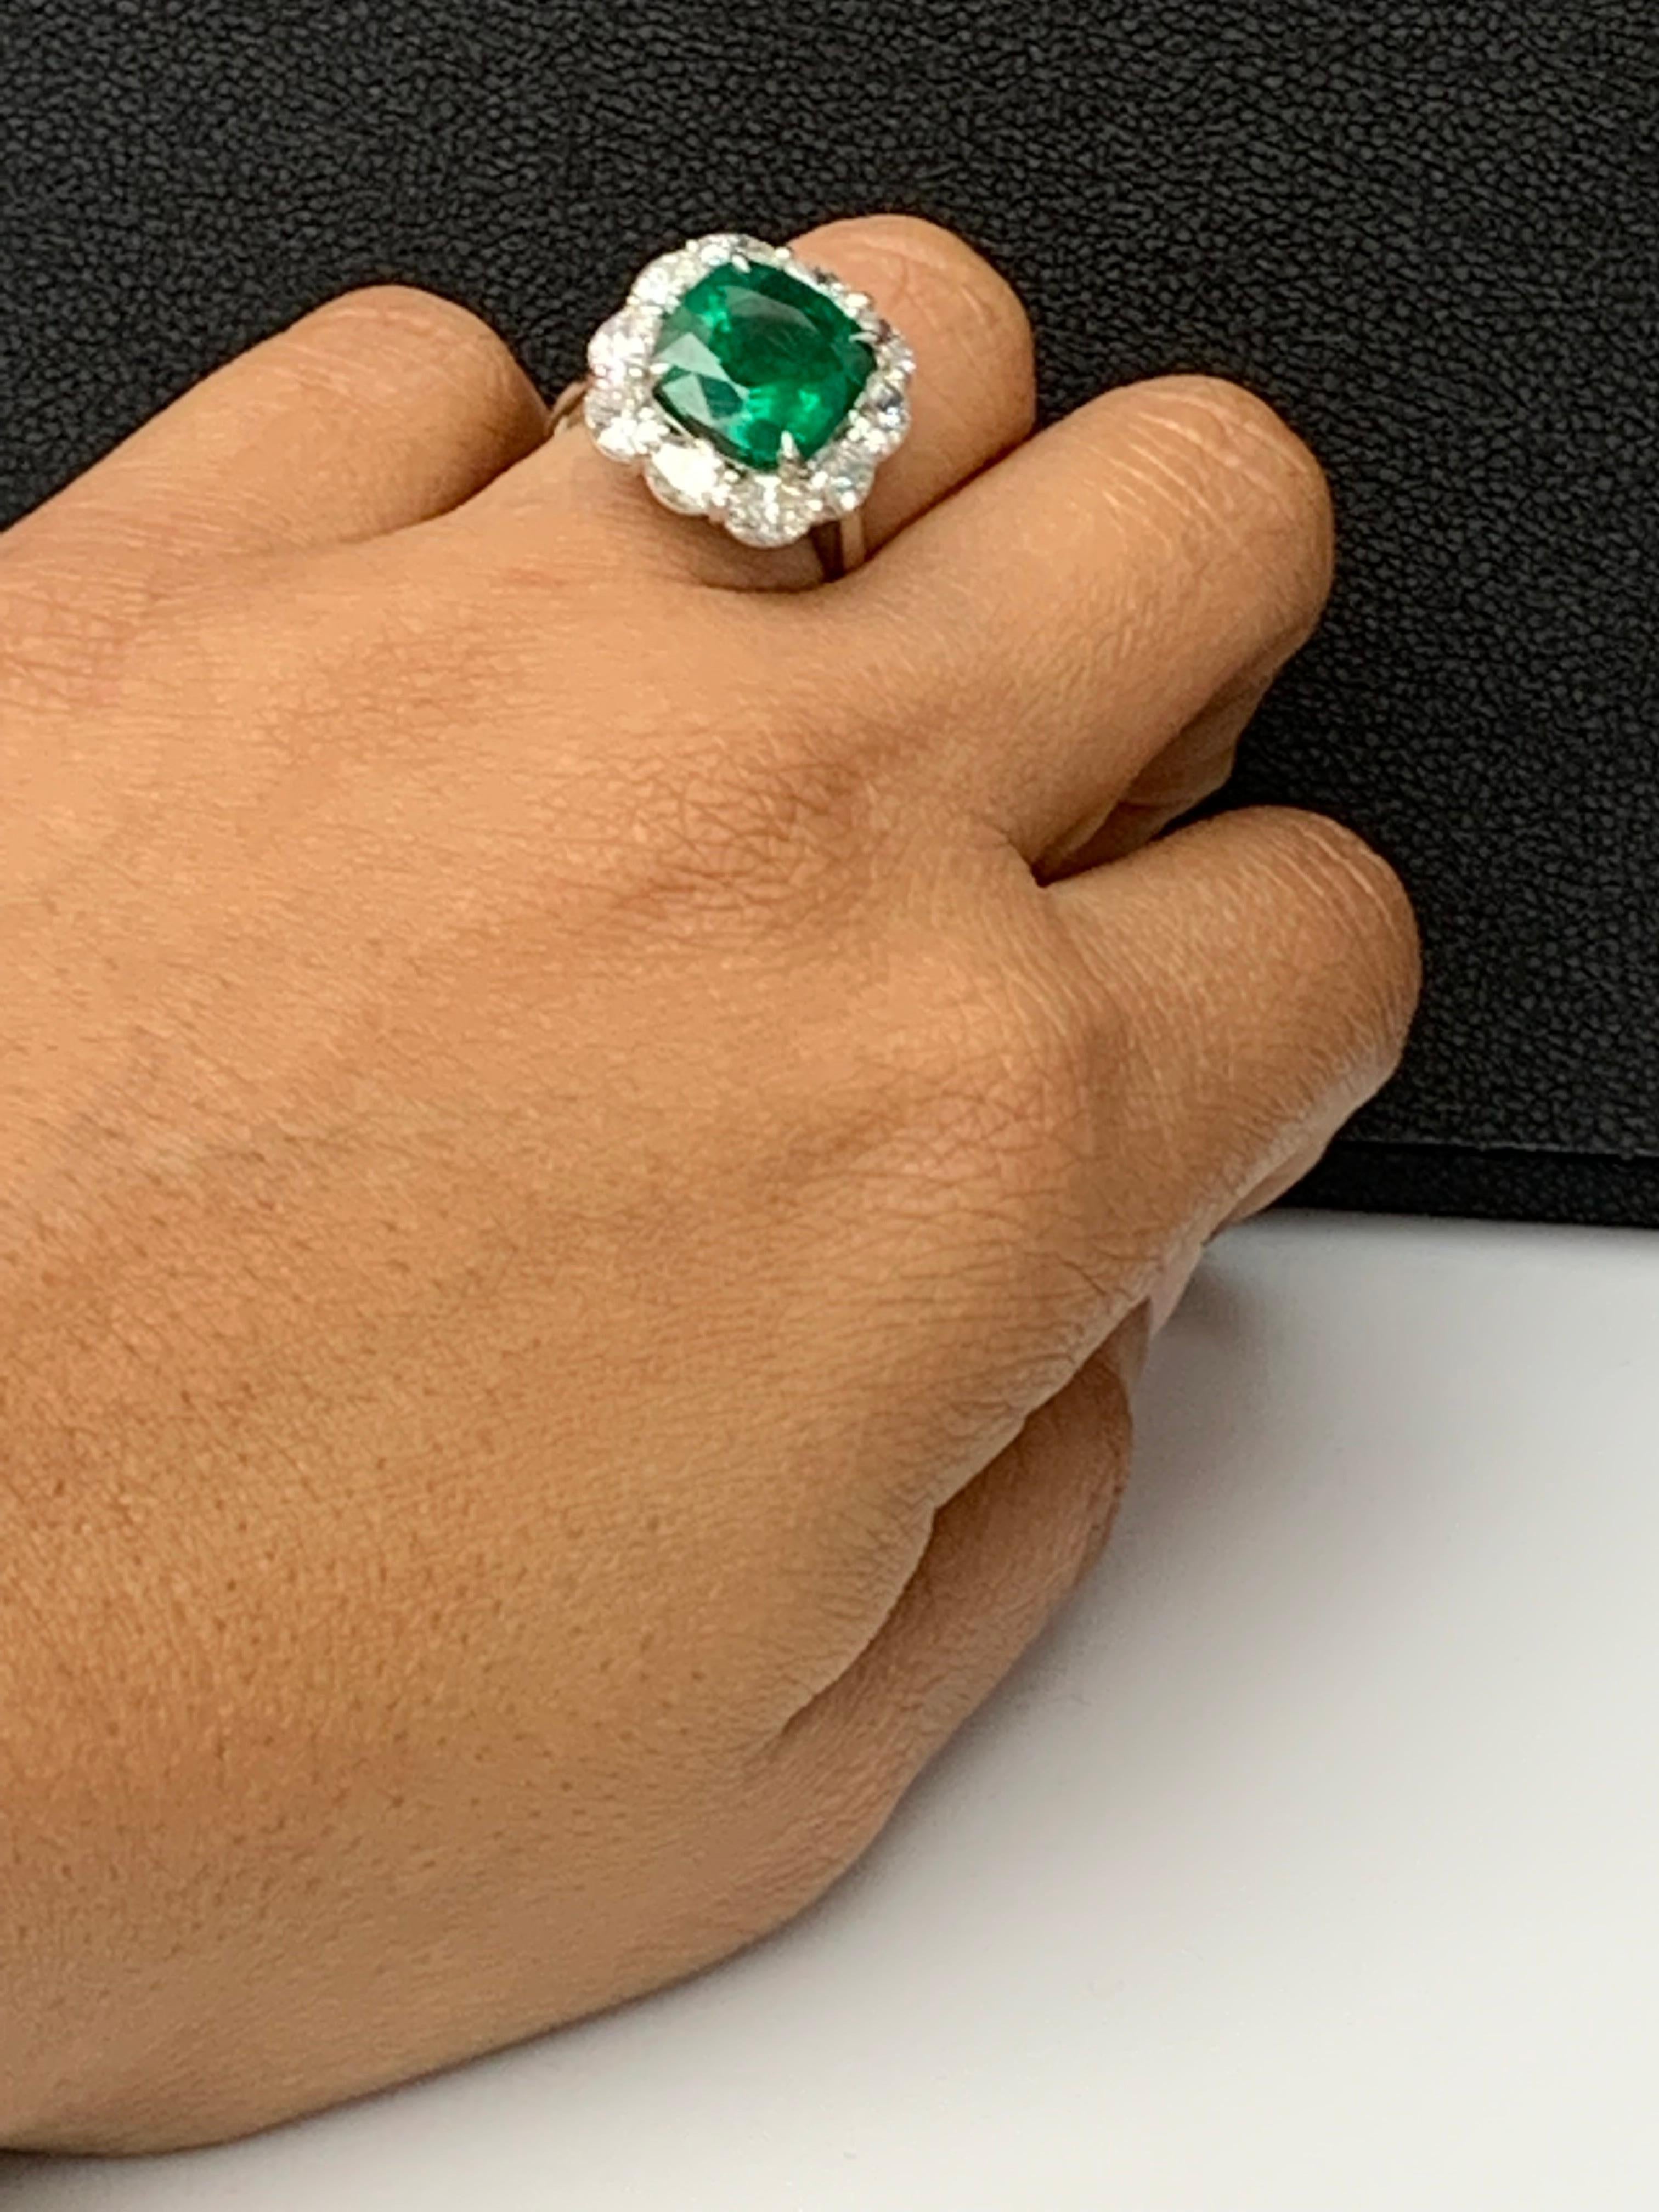 Certified 6.58 Carat Cushion Cut Emerald Diamond Ring in Platinum For Sale 7